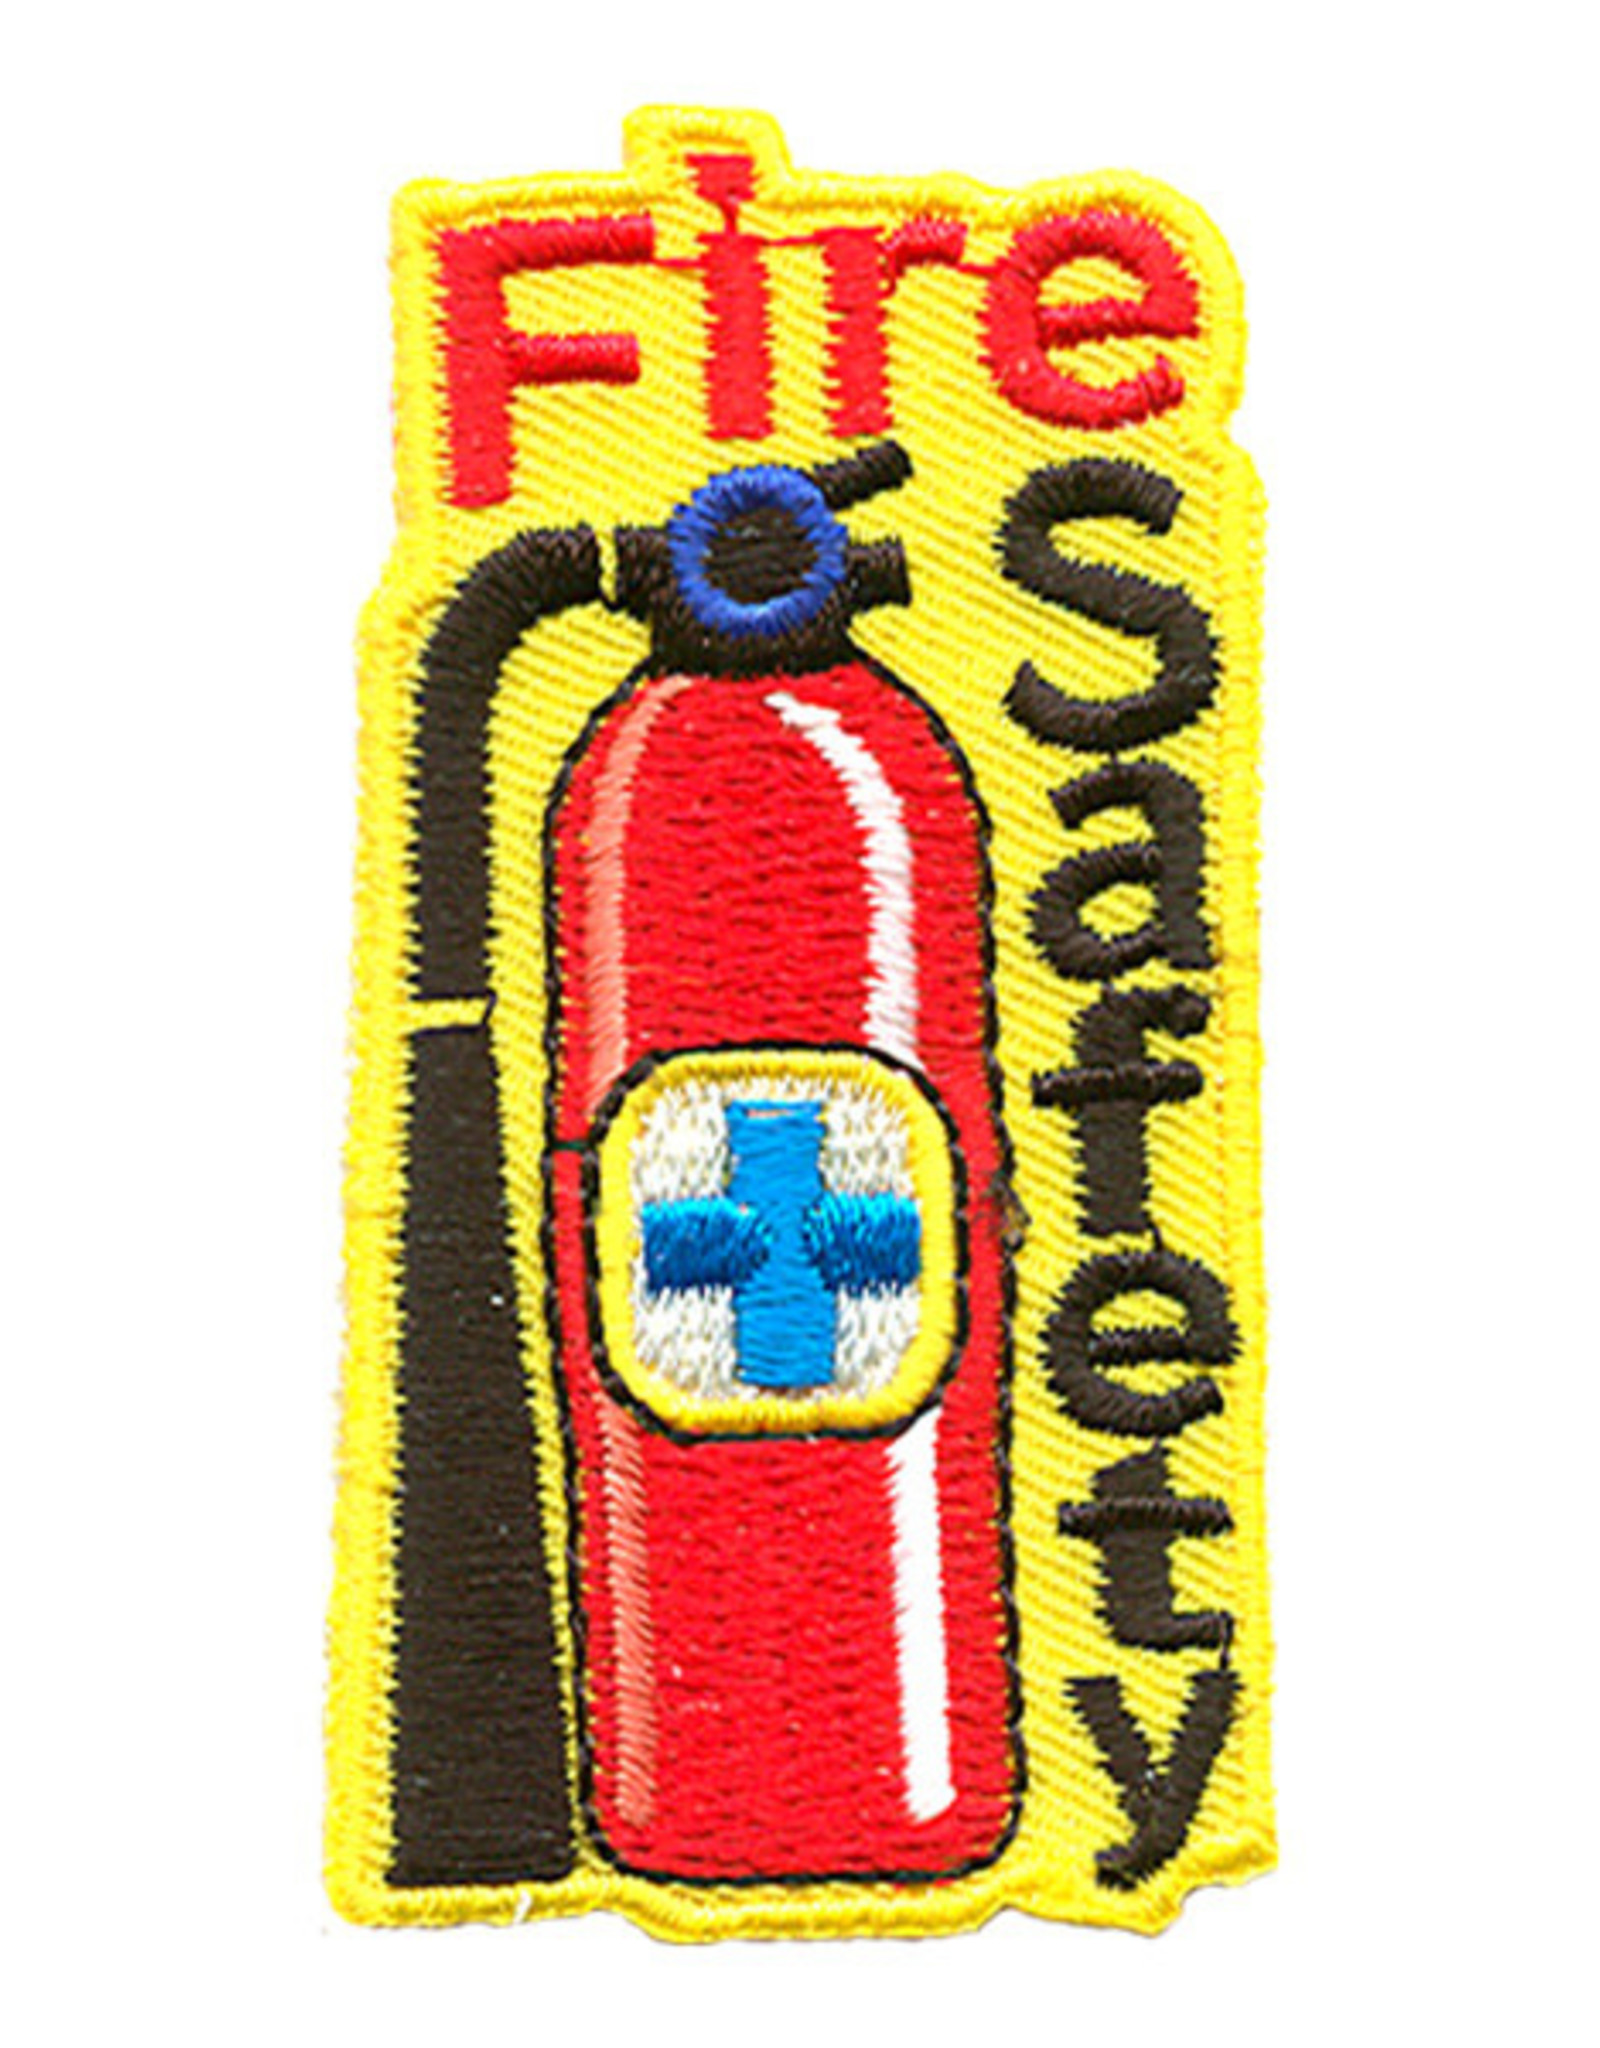 Advantage Emblem & Screen Prnt Fire Safety Extinguisher Fun Patch